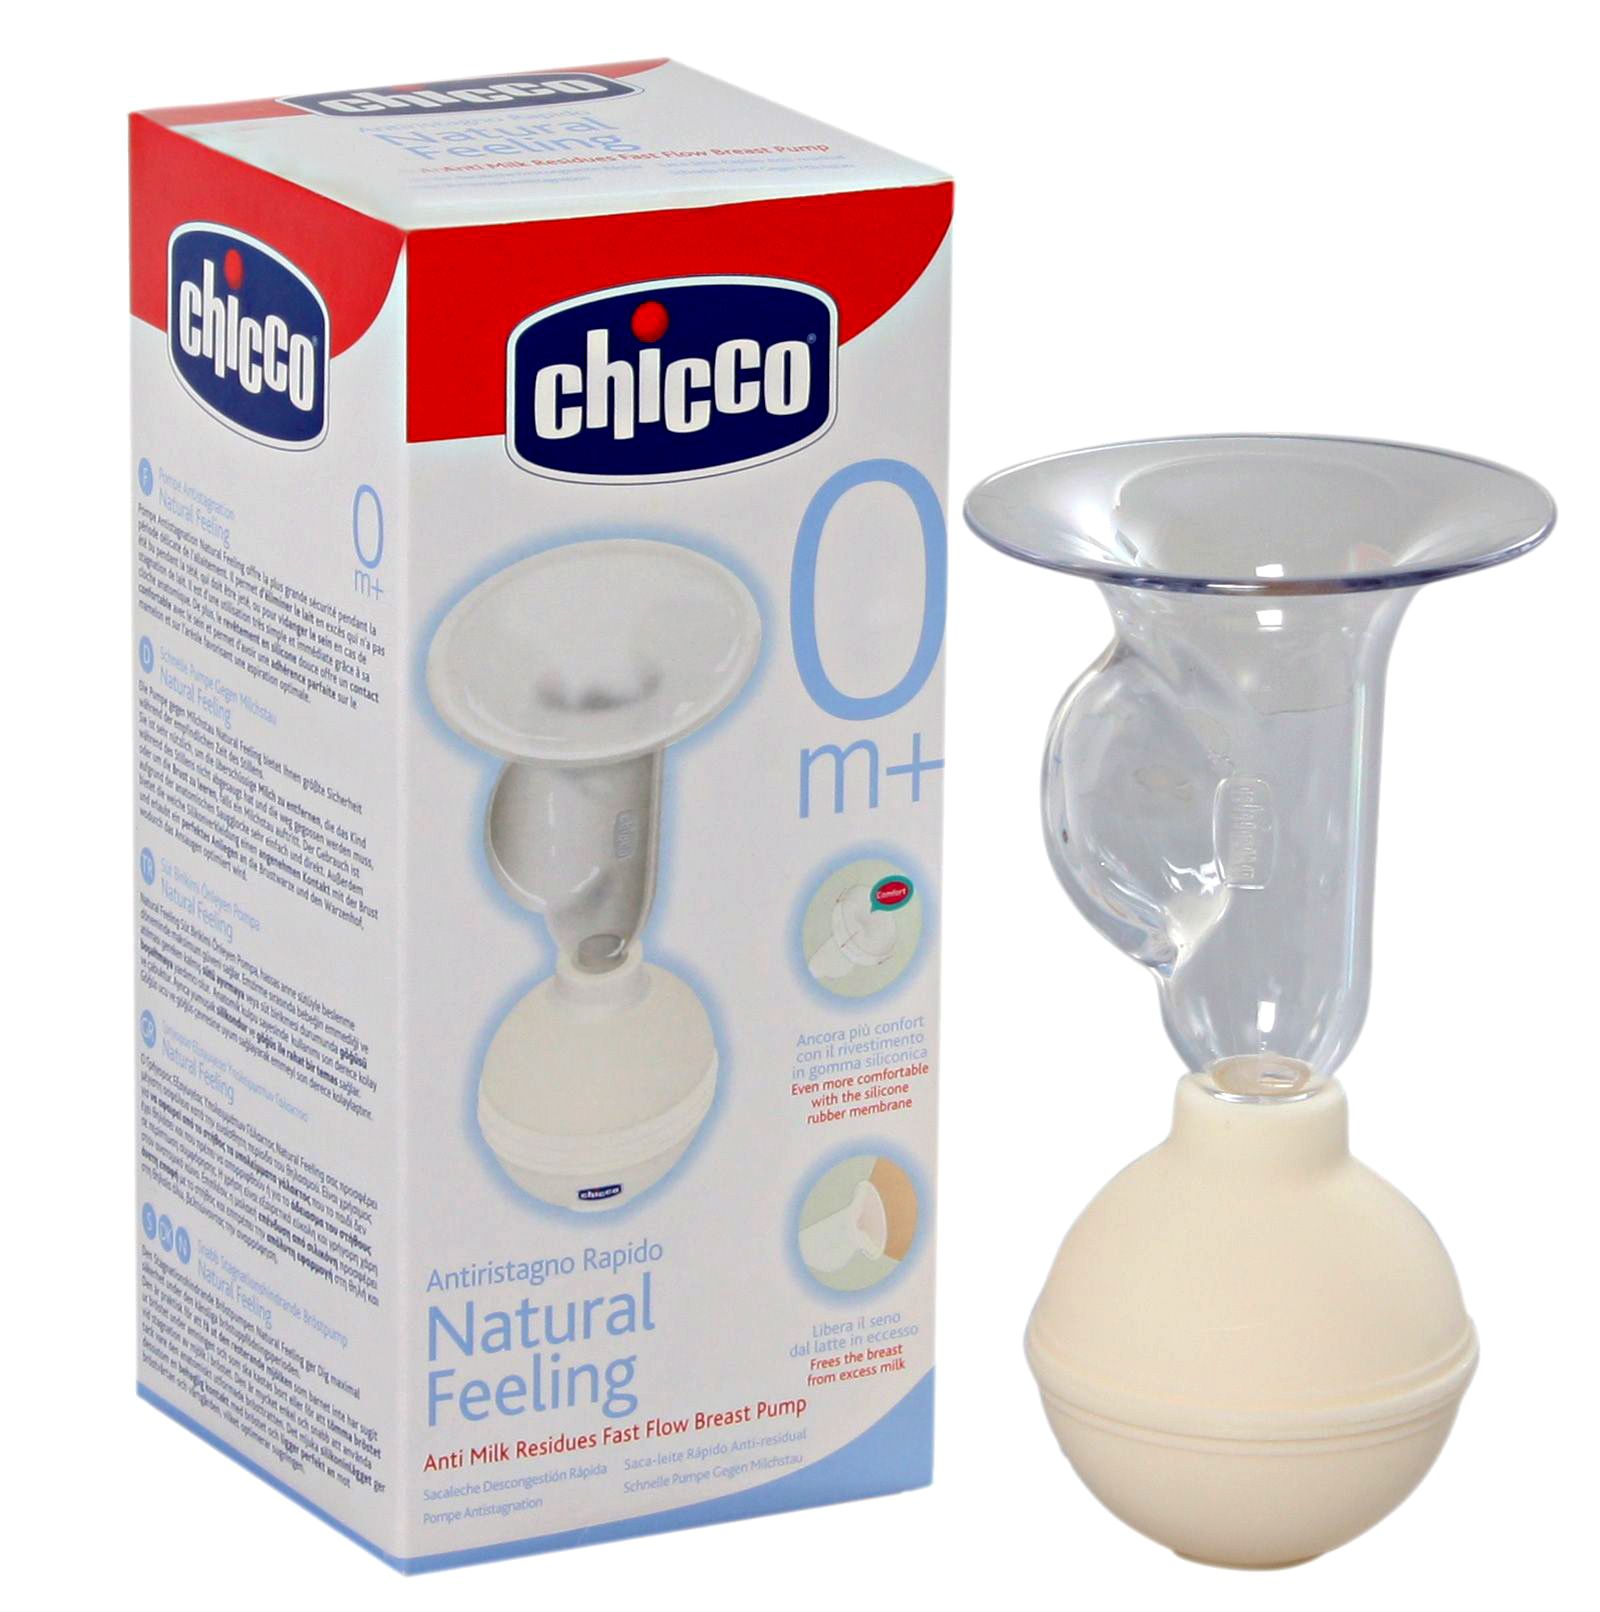 Chicco - Natural Feeling Anti Milk Residues Fast Flow Breast Pump